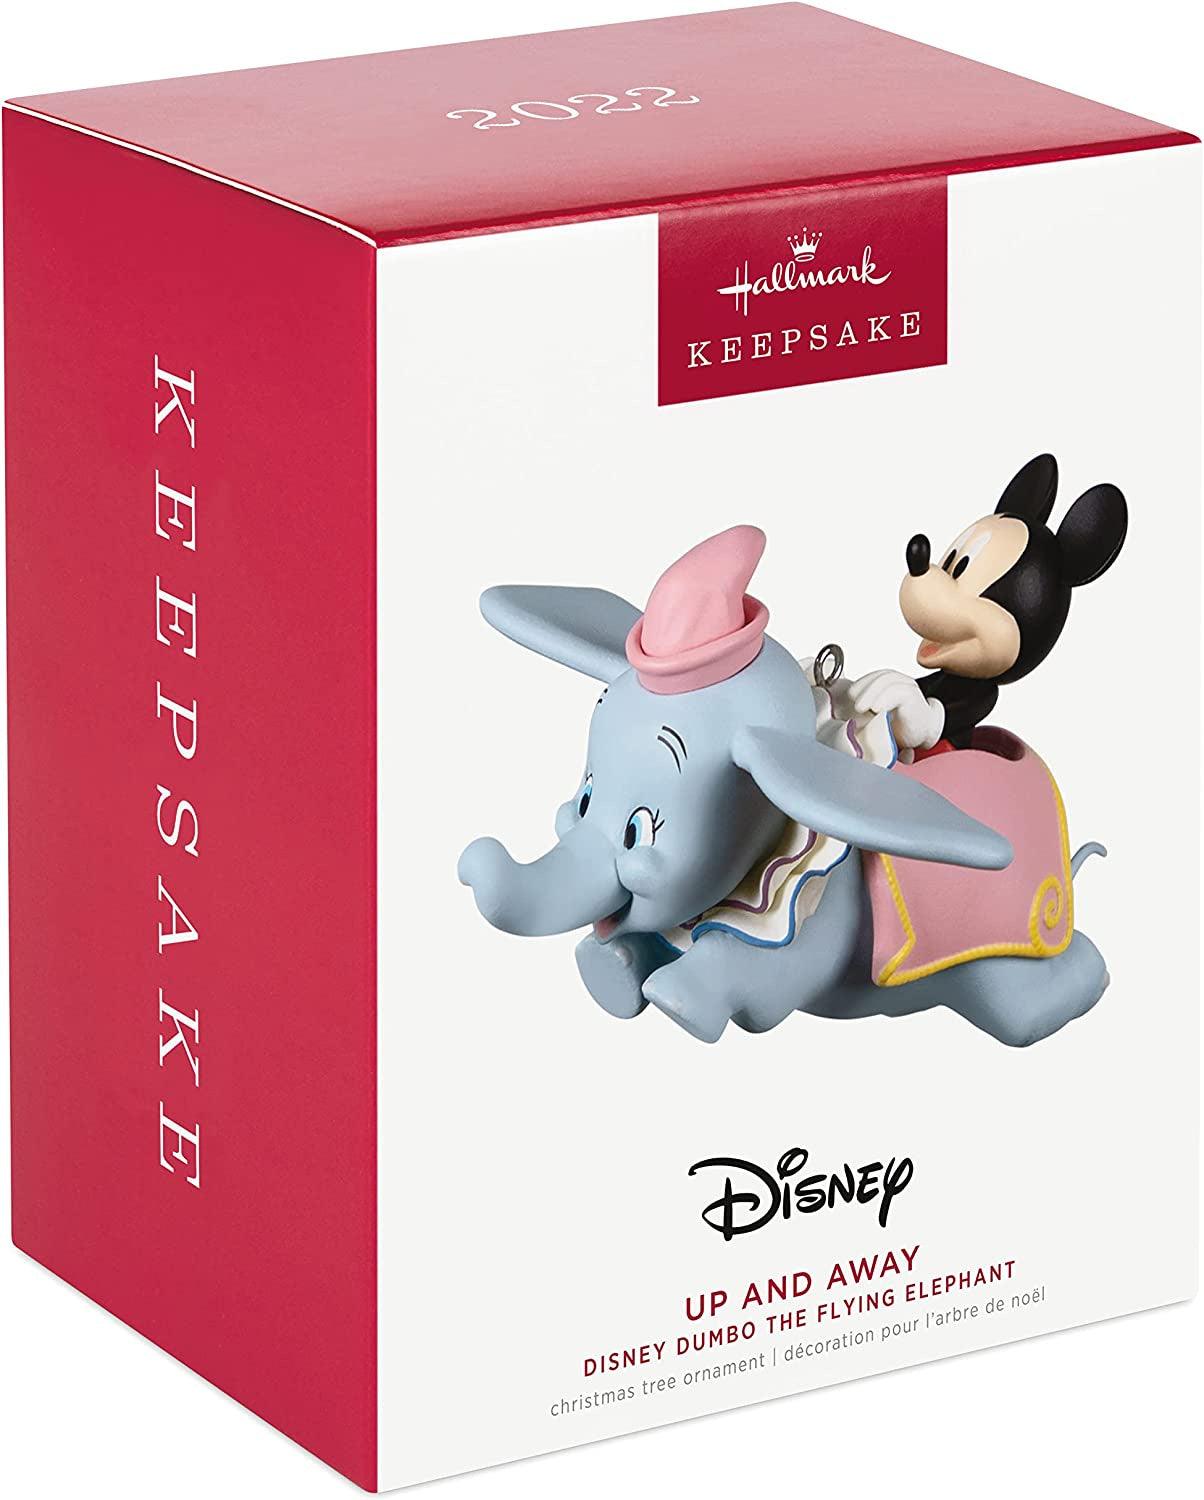 Hallmark Keepsake Christmas Ornament 2022, Disney Dumbo The Flying Elephant Up and Away